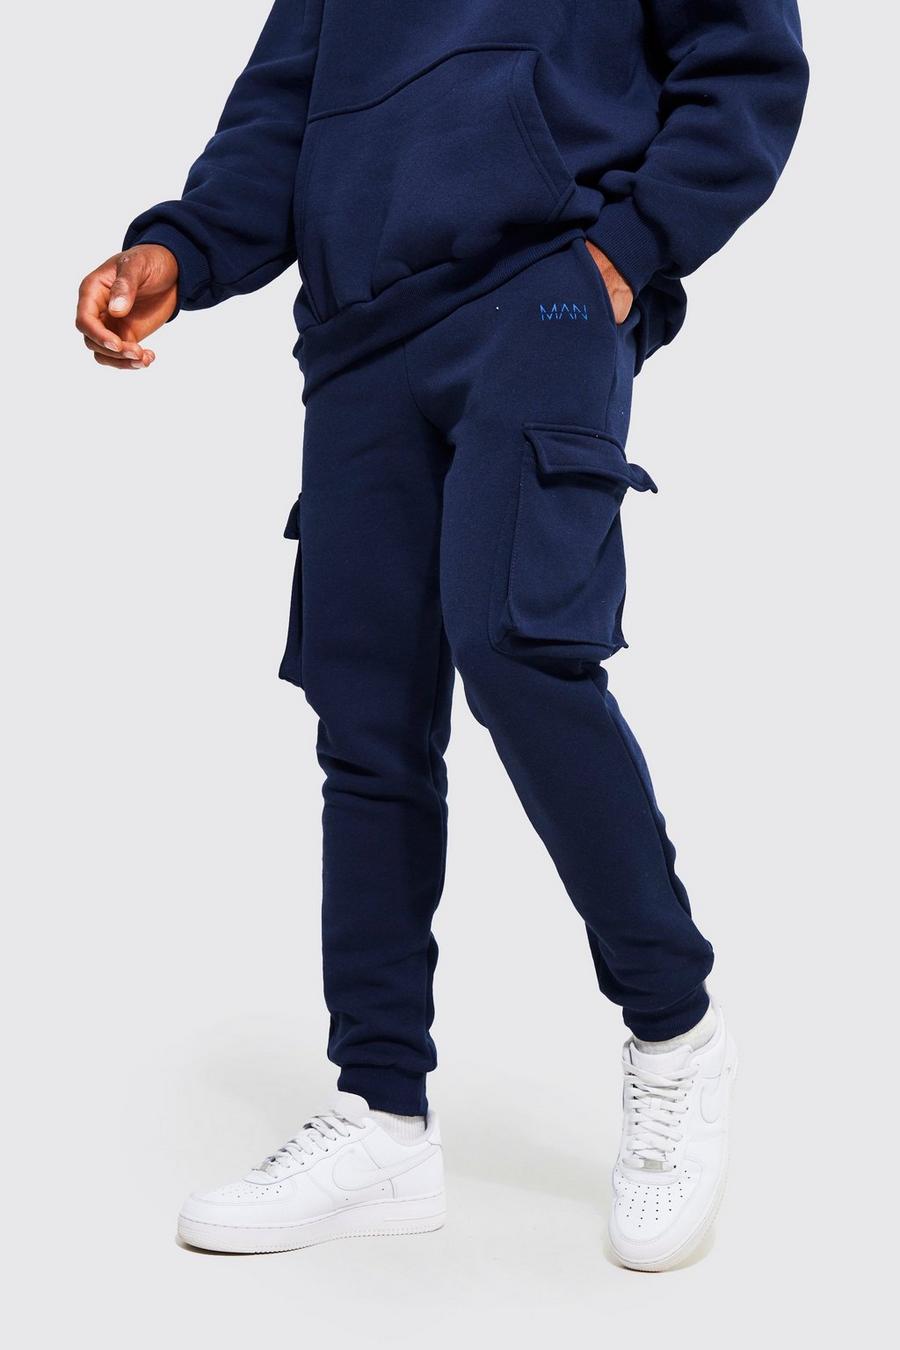 Pantalón deportivo MAN Original cargo pitillo, Navy blu oltremare